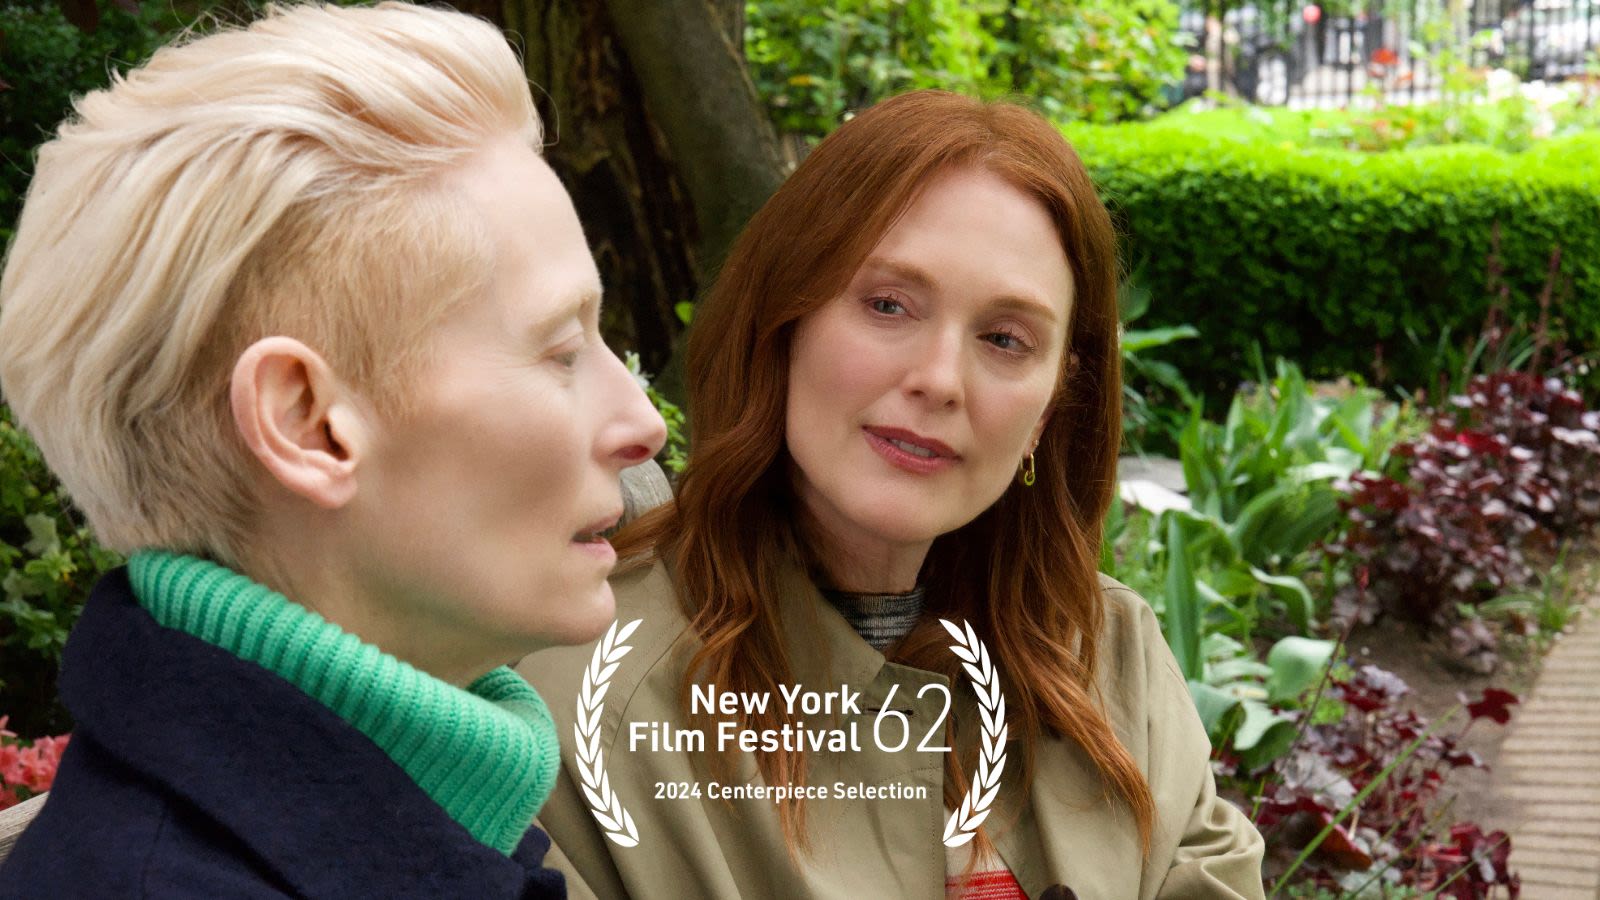 Pedro Almodovar's 1st Full Length English Feature to NY Film Fest with Julianne Moore, Tilda Swinton - Showbiz411